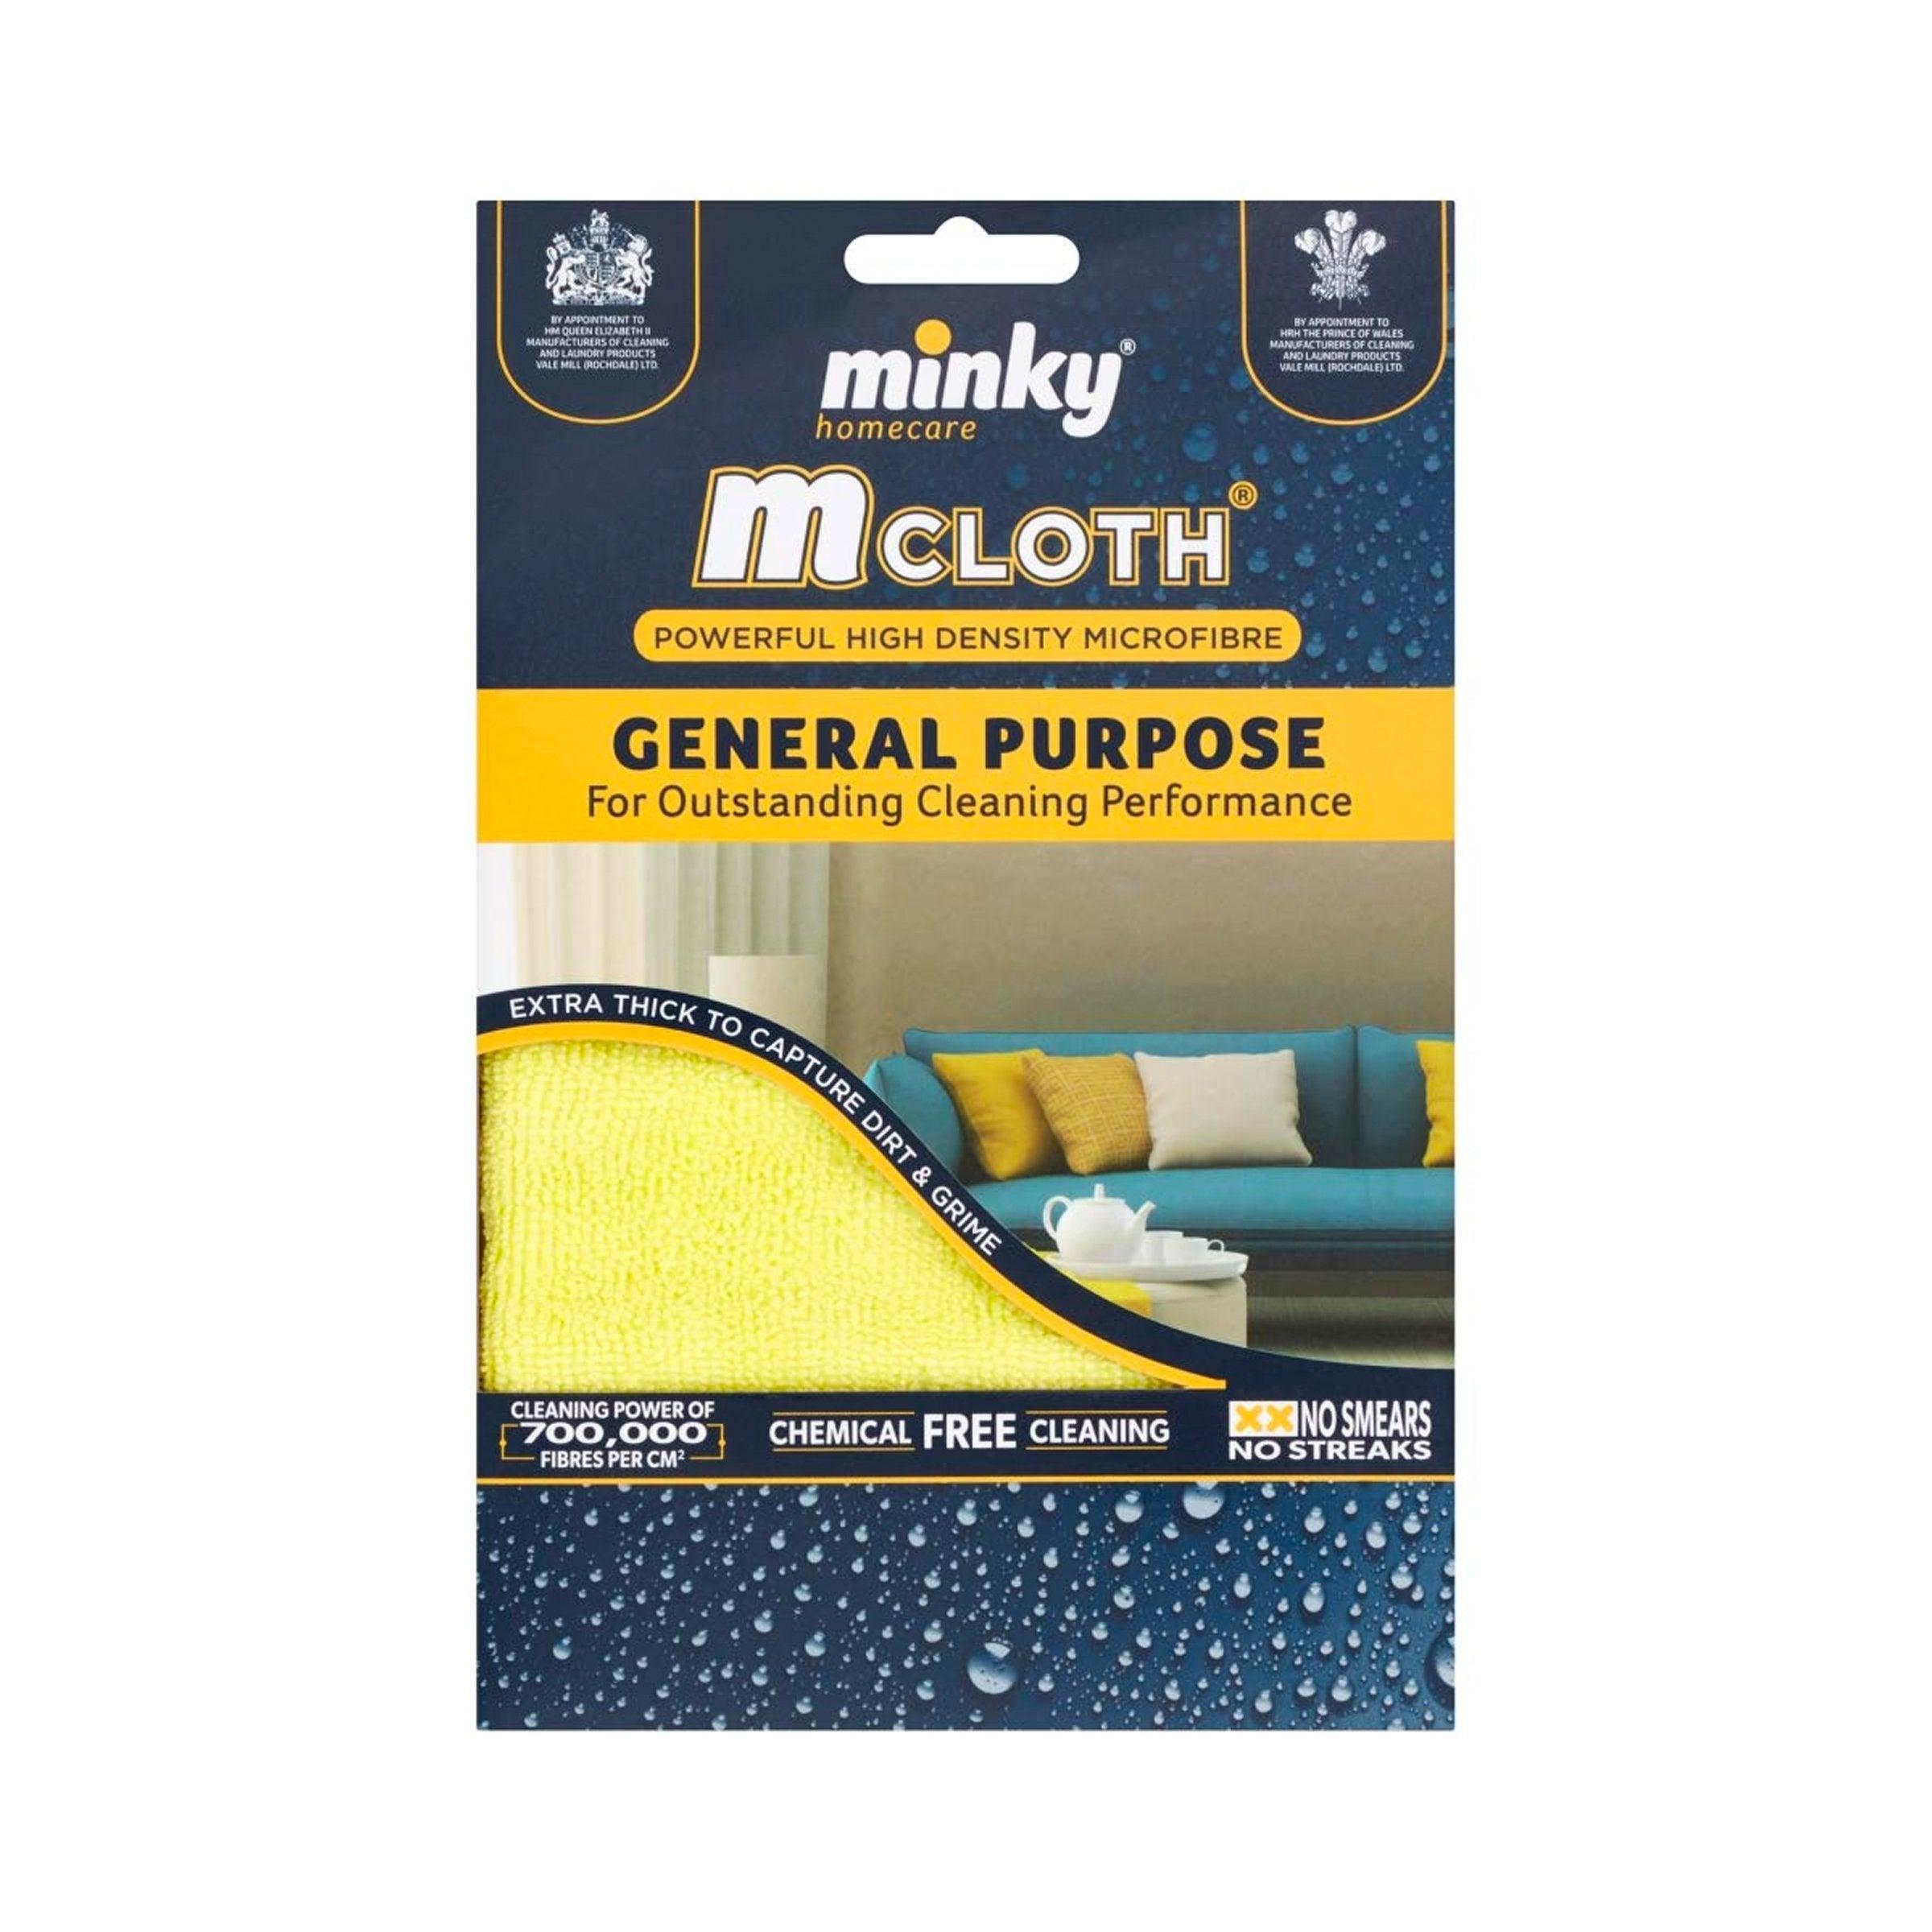 Minky M Cloth General Purpose - Vending Superstore